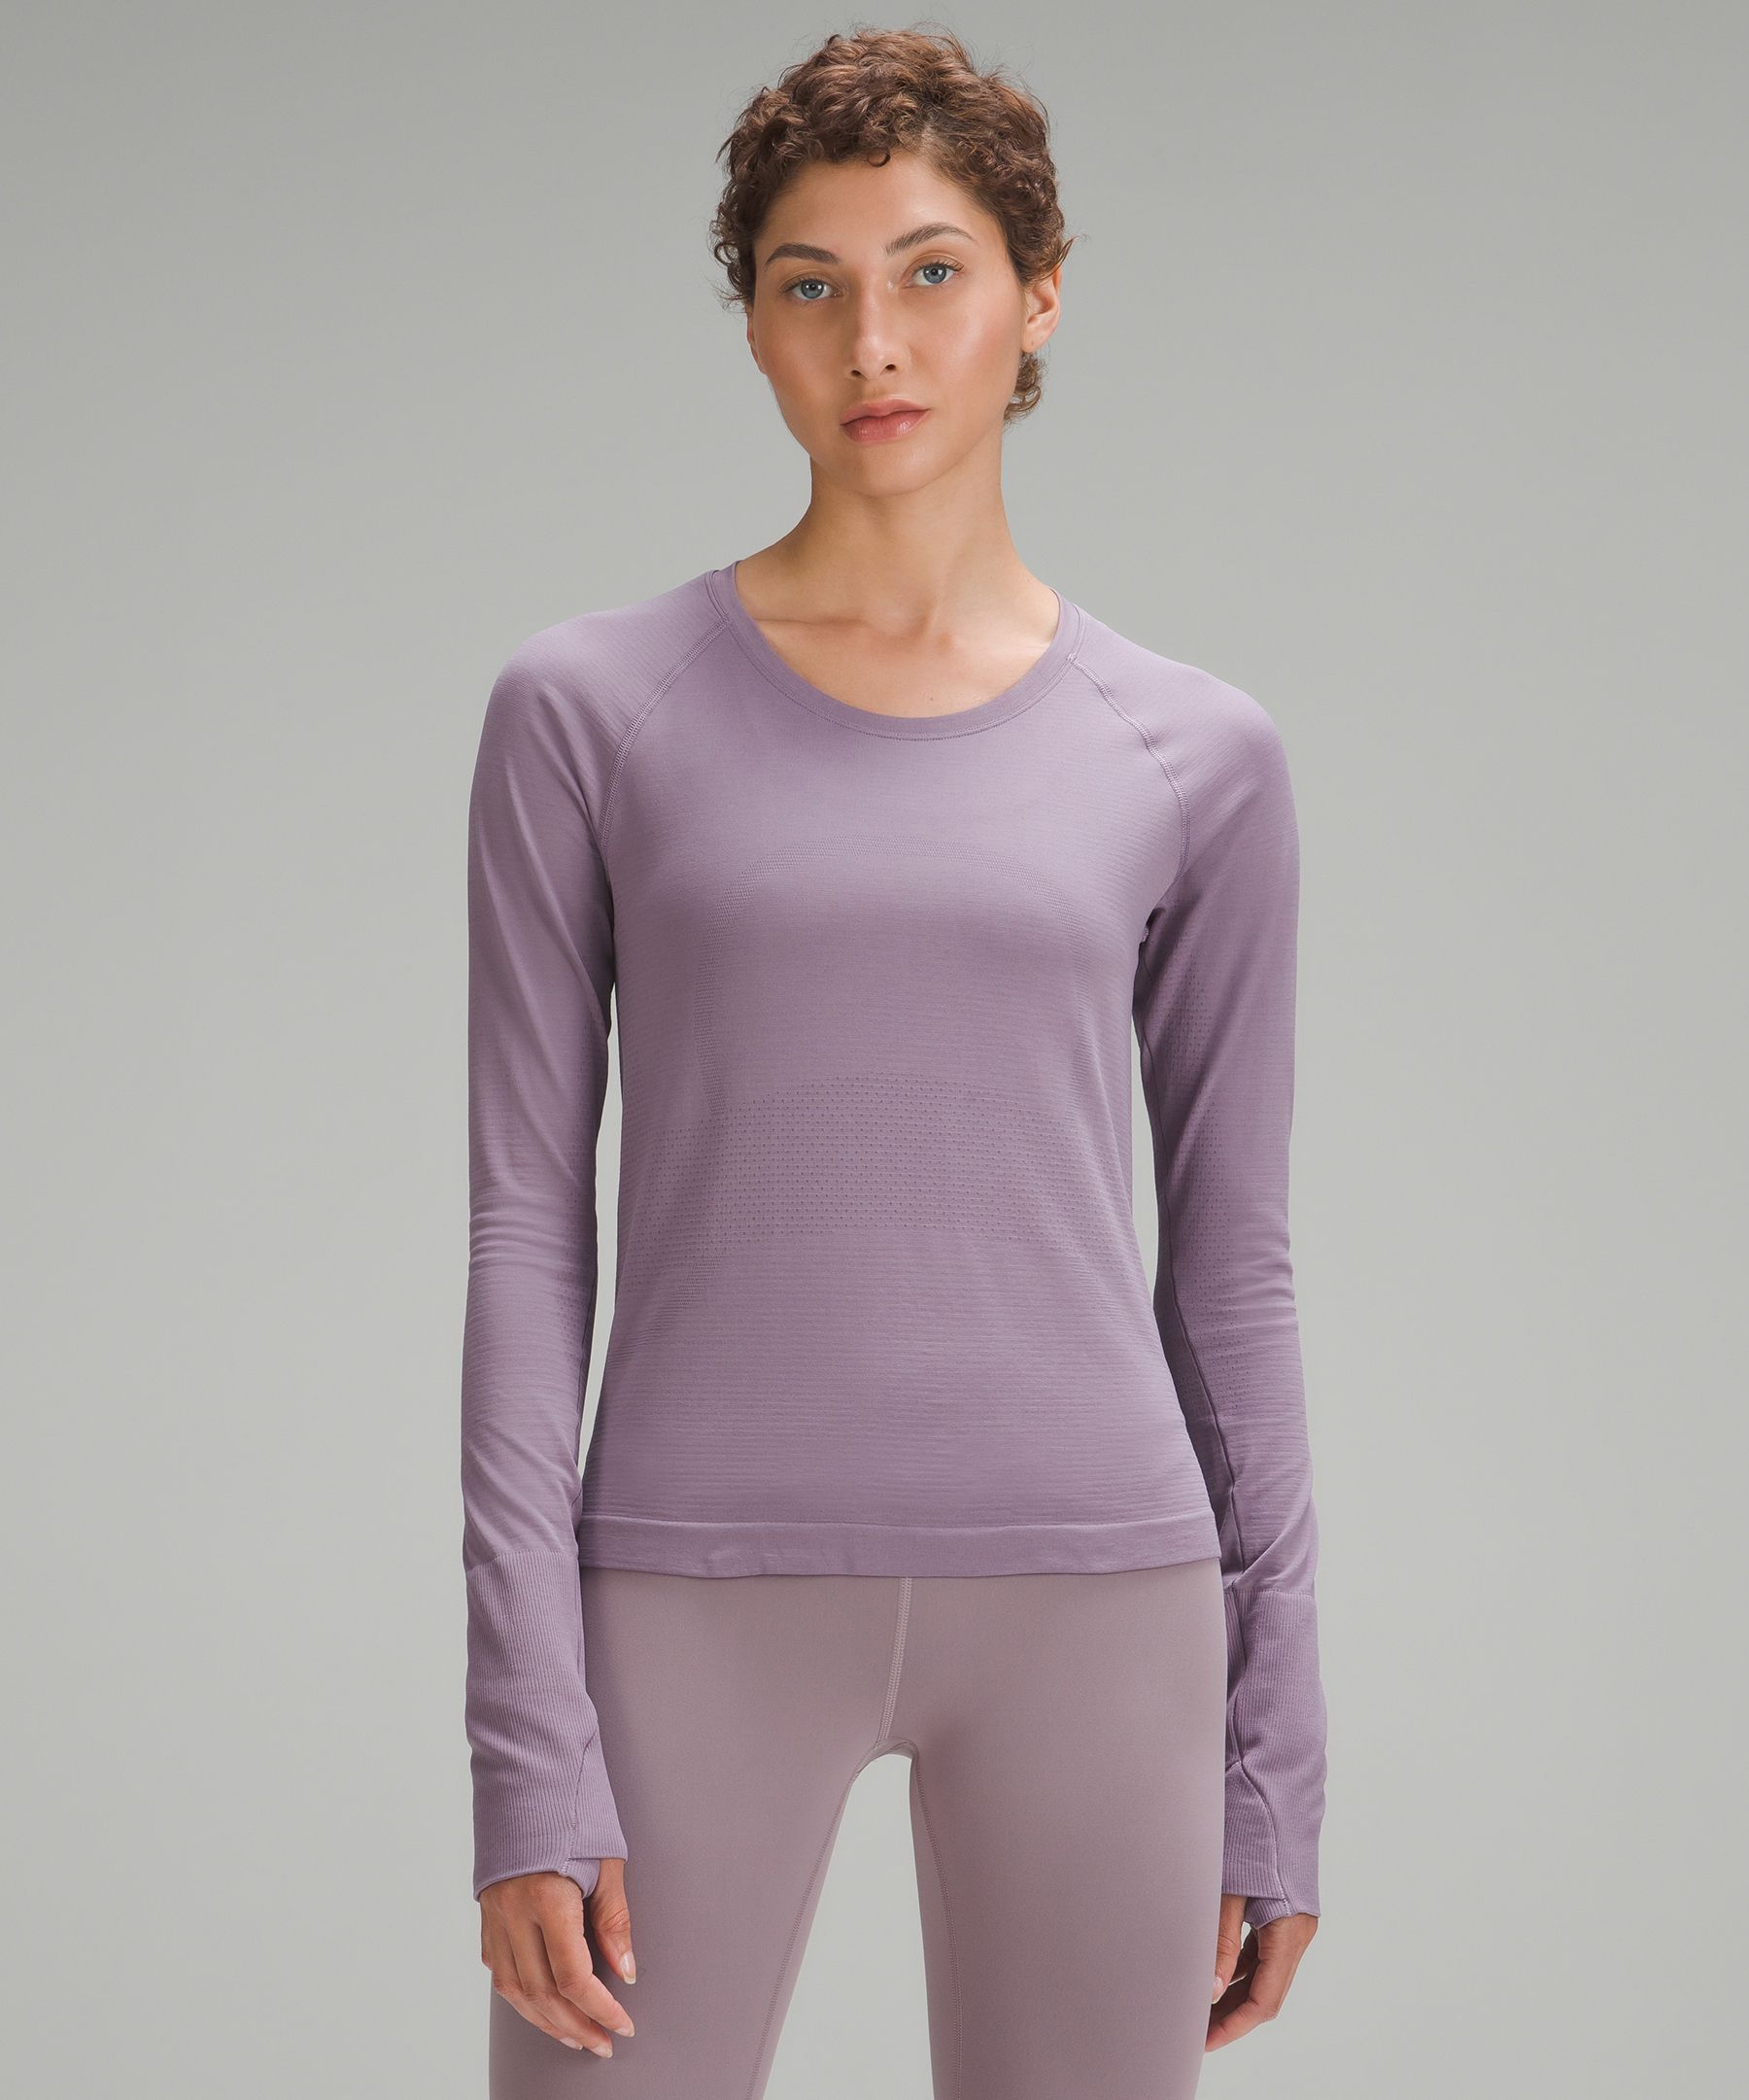 Swiftly Tech Long-Sleeve Shirt 2.0 *Race Length, Women's Long Sleeve Shirts, lululemon